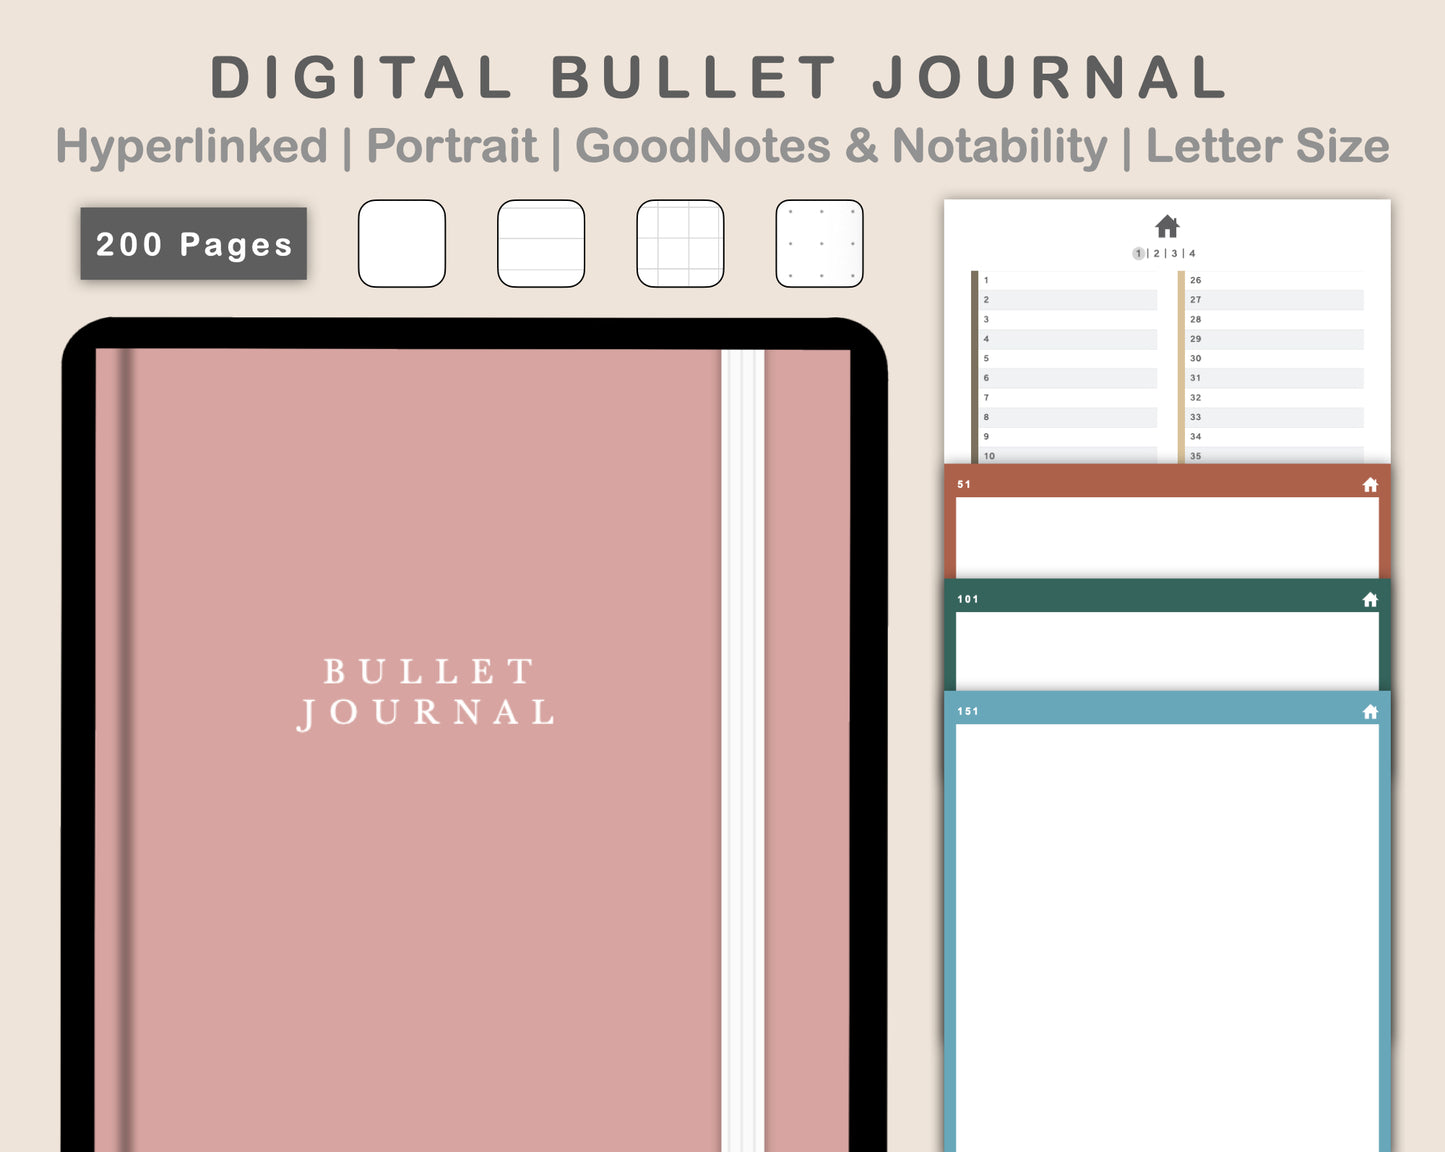 Digital Bullet Journal 200 Pages - Portrait - Muted